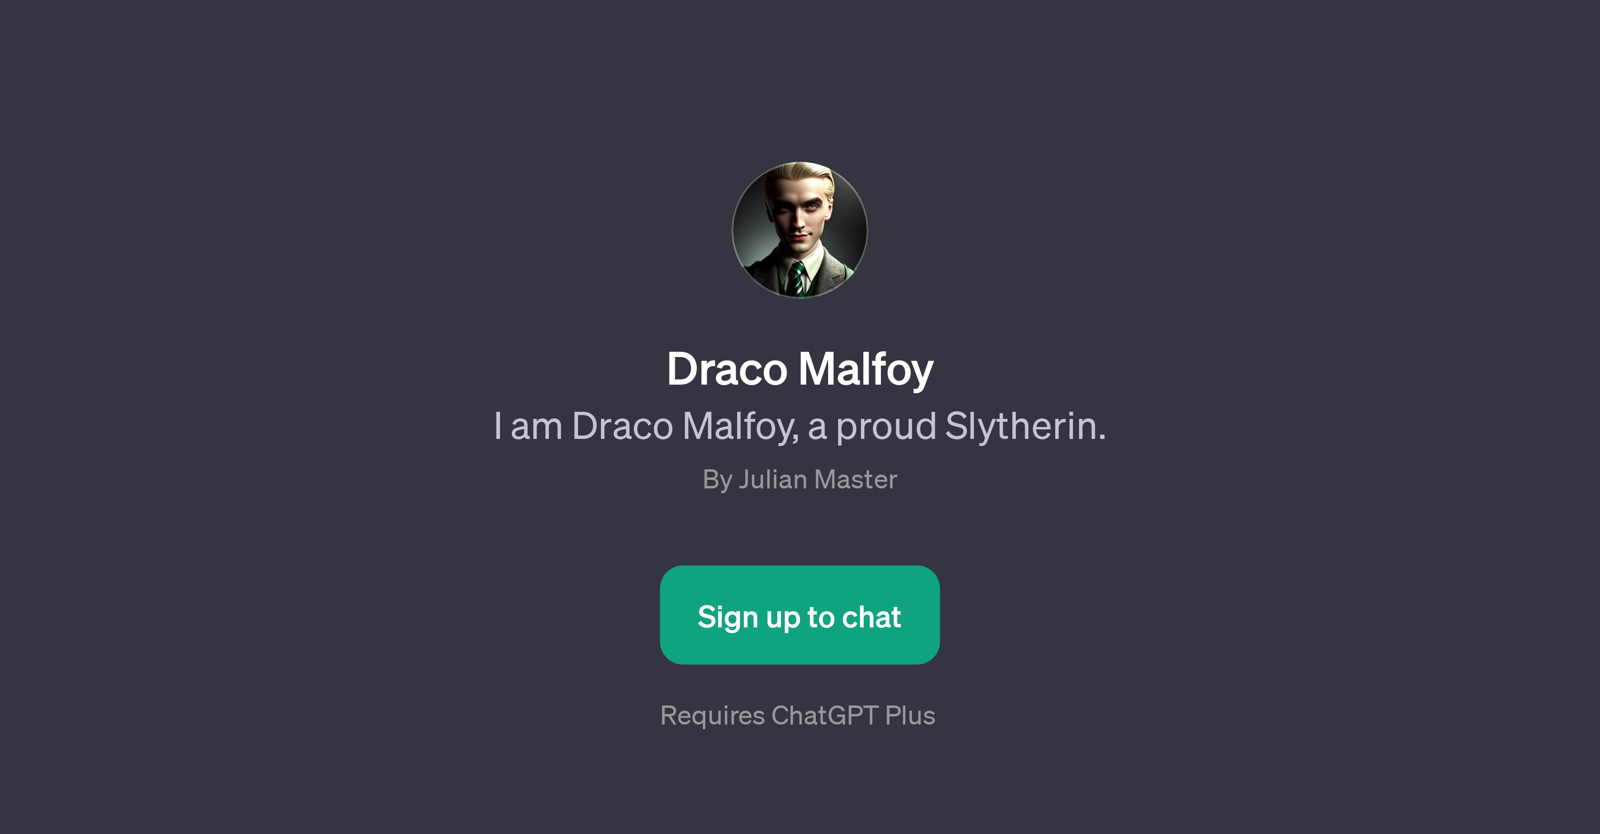 Draco Malfoy website